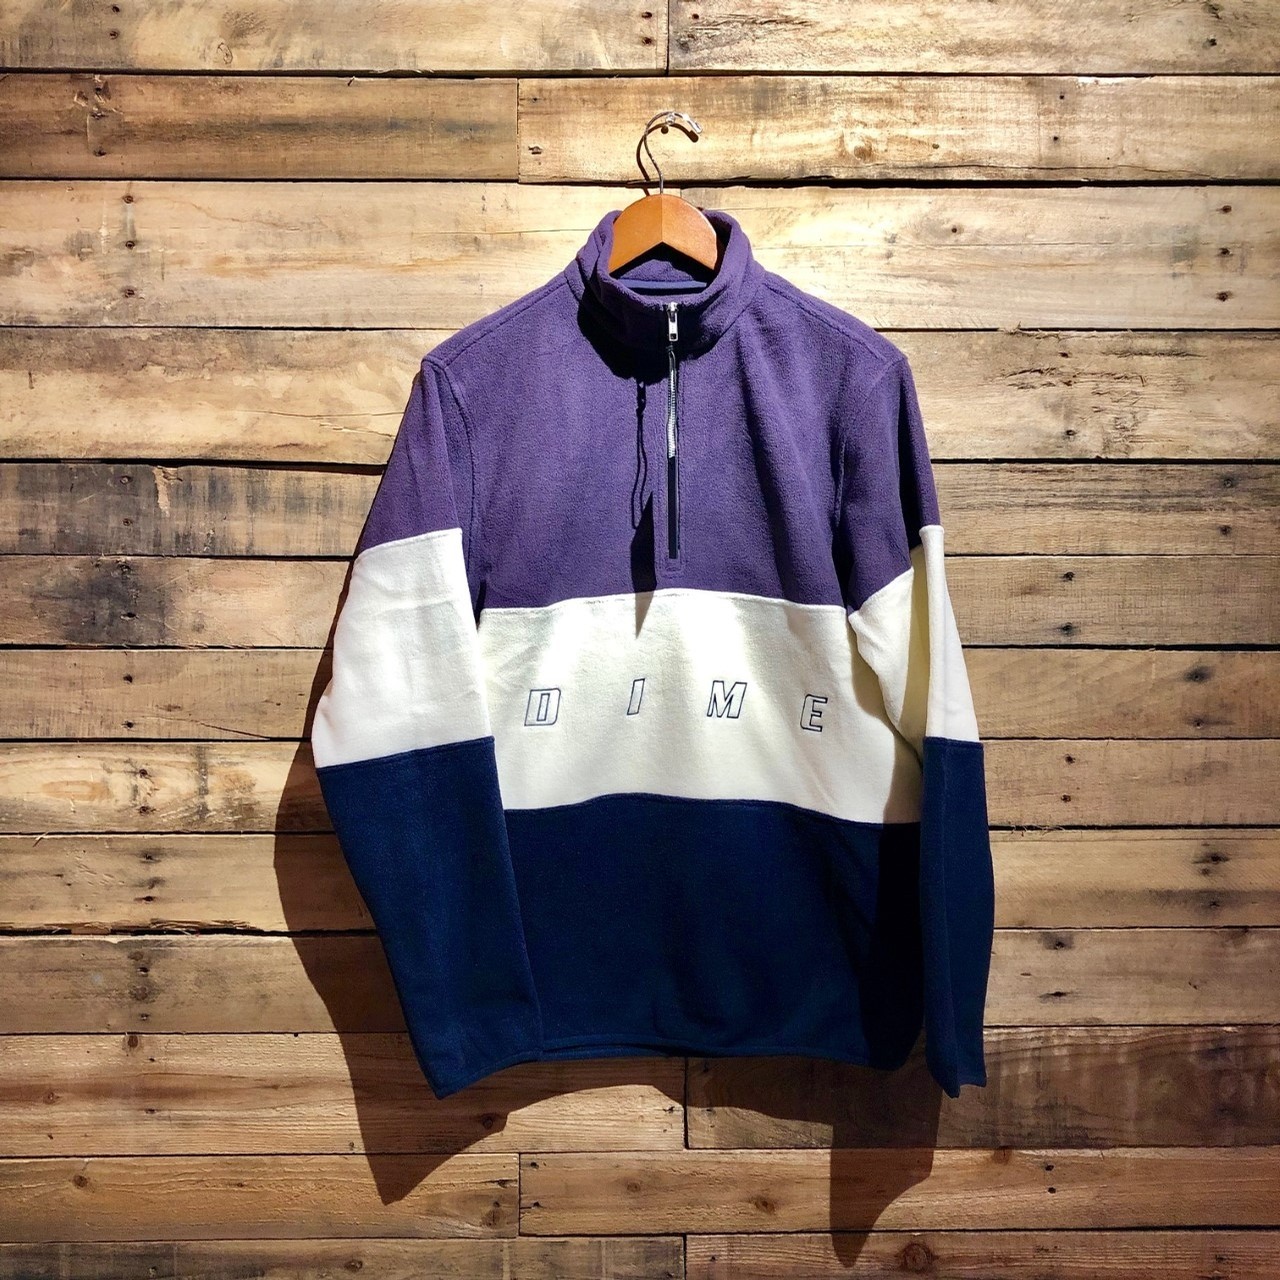 purple fleece pullover